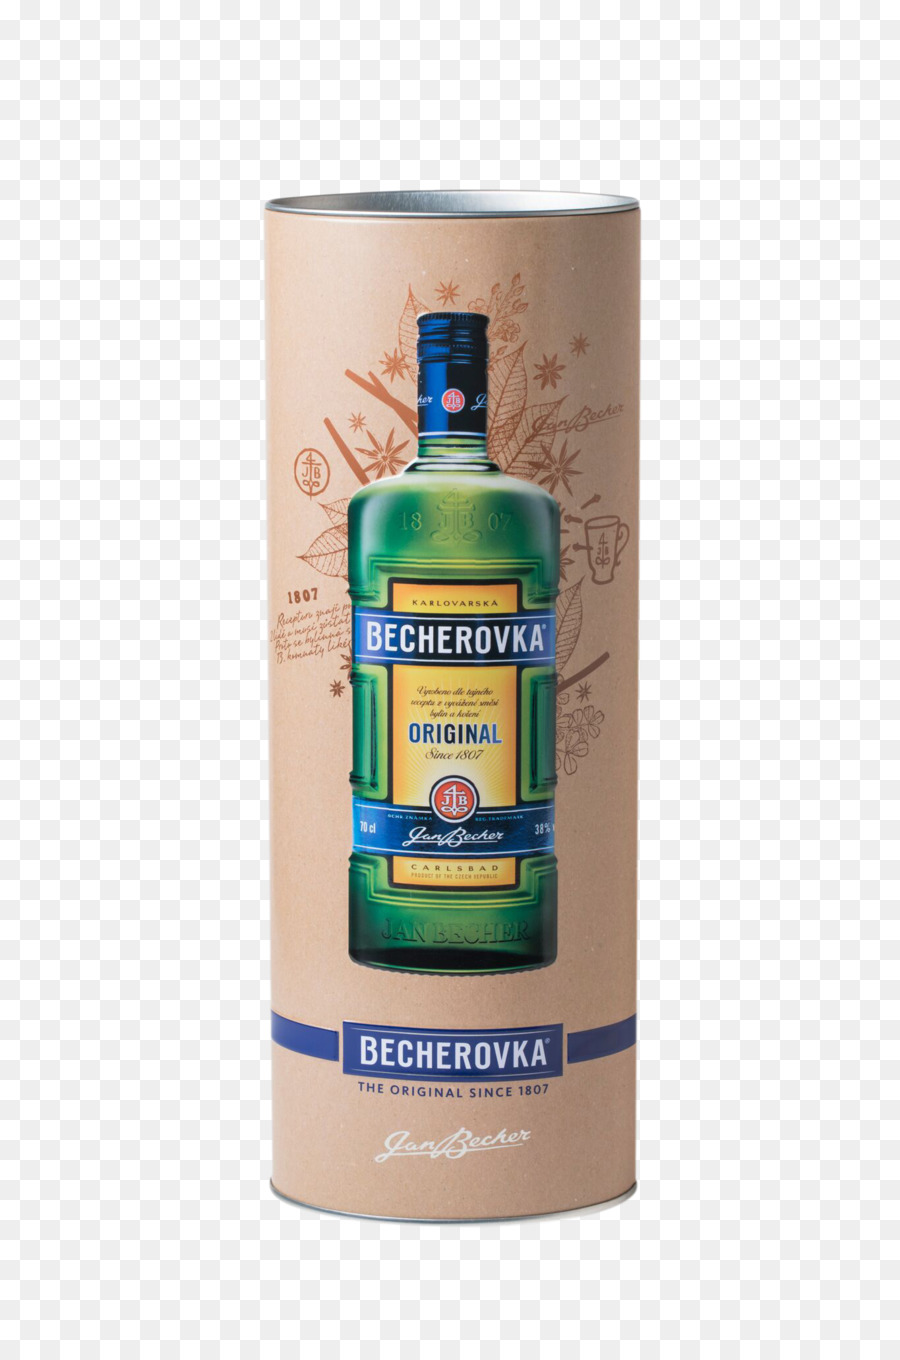 Likör Becherovka als Aperitif Distilled beverage Metaxa - Produktmarketing